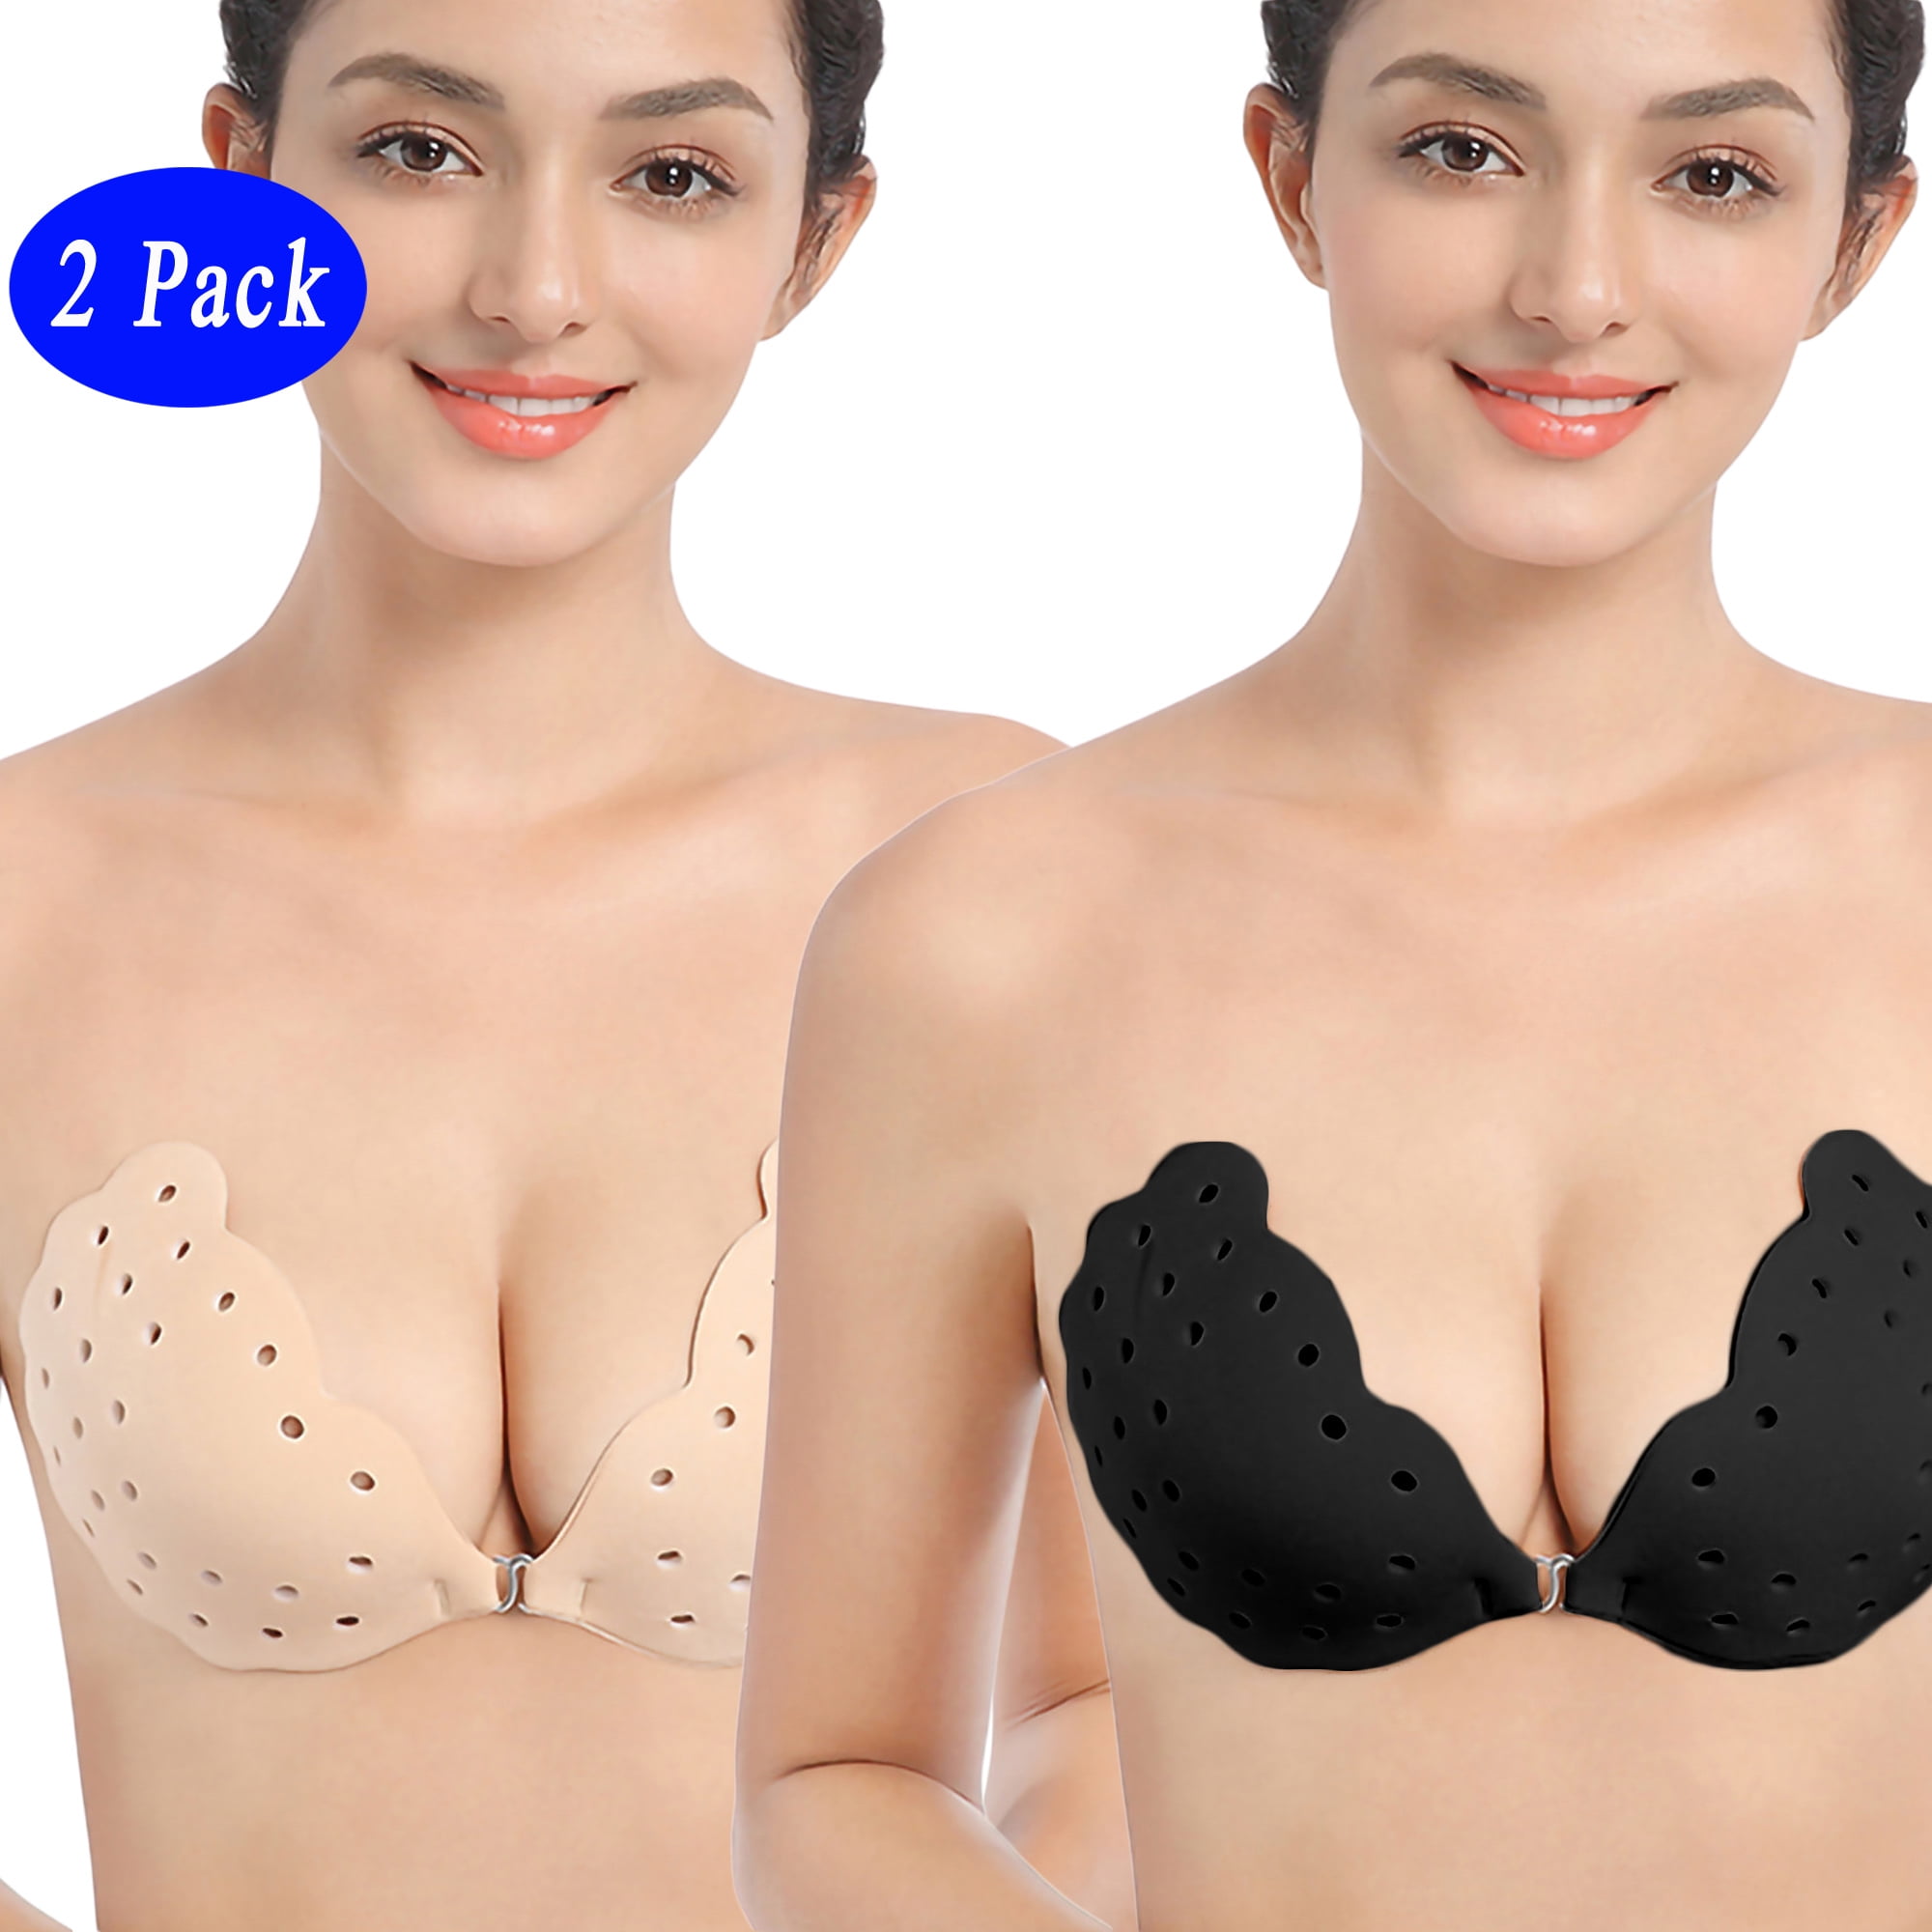 2 Pack Adhesive Bra Reusable Sticky Invisible Push up Bra for Women MITALOO Strapless Bra 